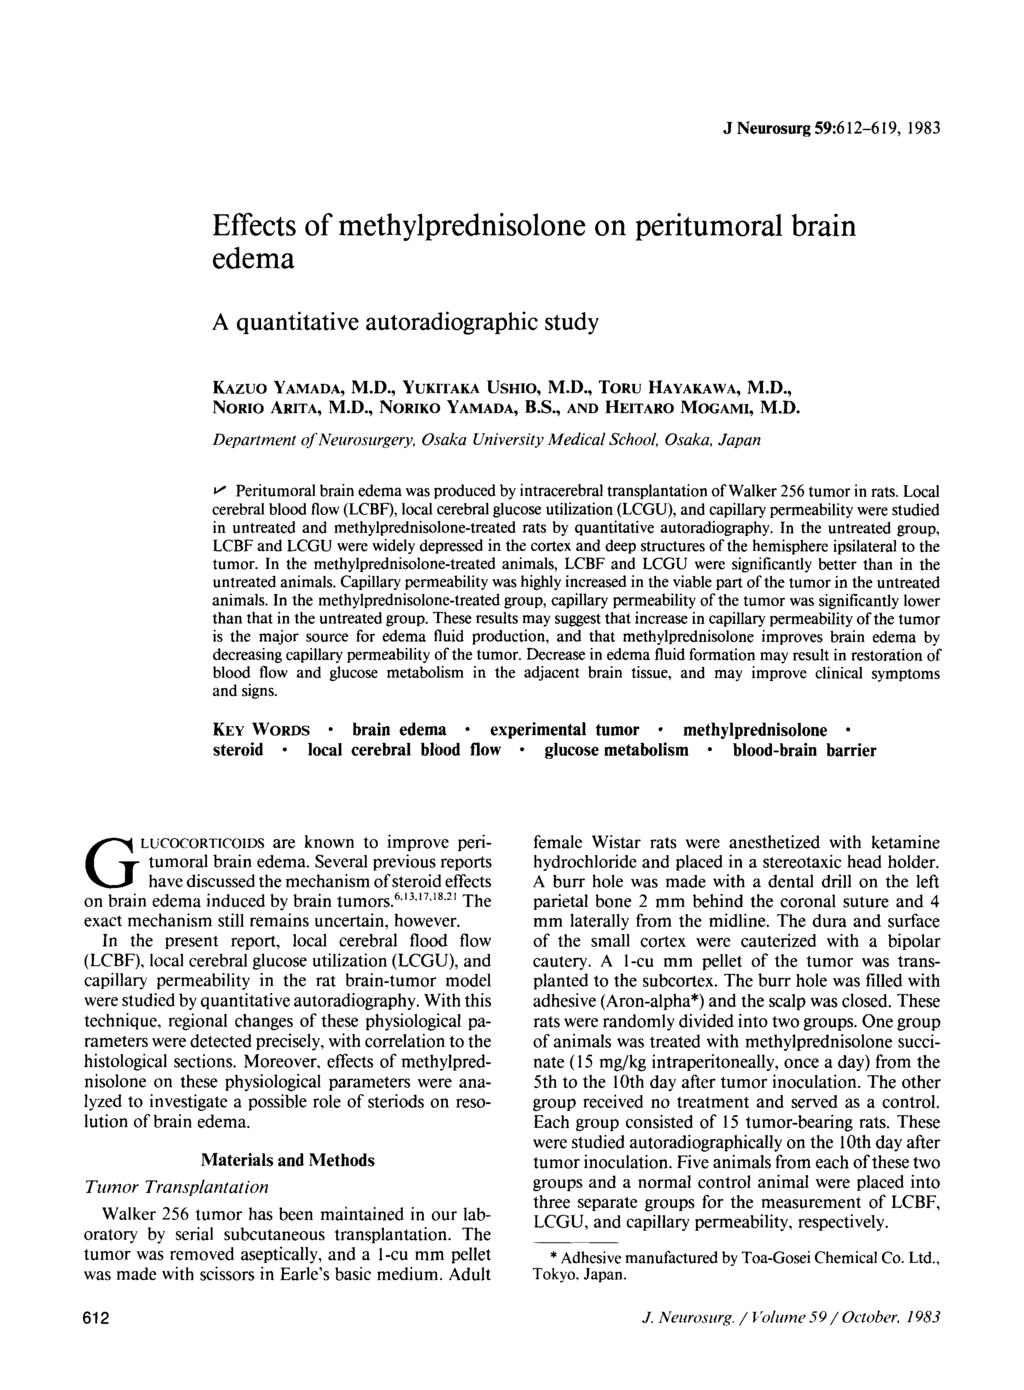 J Neurosurg 59:612-619, 1983 Effects of methylprednisolone on peritumoral brain edema A quantitative autoradiographic study KAZUO YAMADA, M.D., YUKITAKA USHIO, M.D., TORU HAYAKAWA, M.D., NORIO ARITA, M.